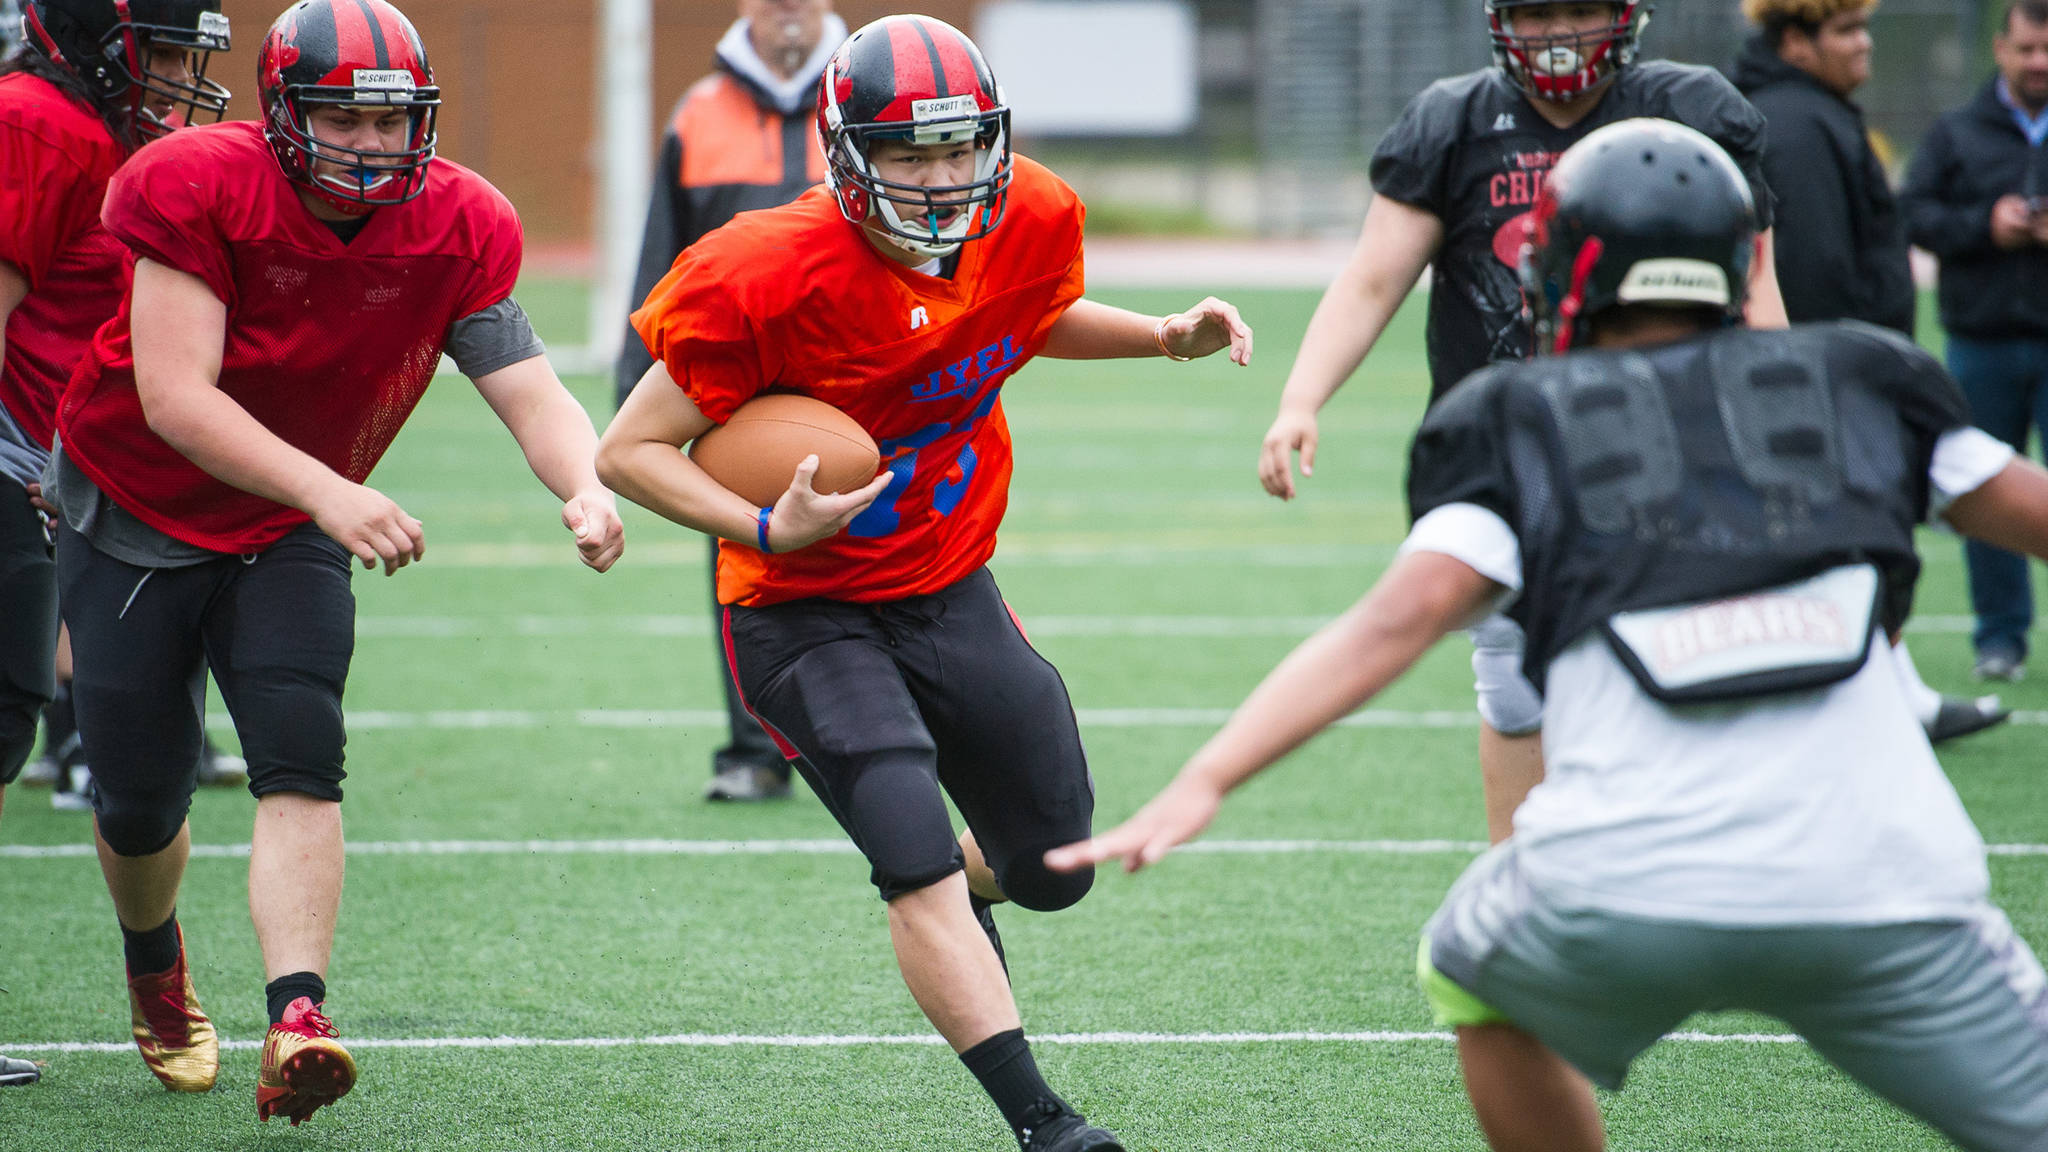 New starting quarterback Max Wheat runs the ball during Juneau-Douglas High School varsity football practice at Adair-Kennedy Memorial Park on Wednesday, Aug. 30, 2017.